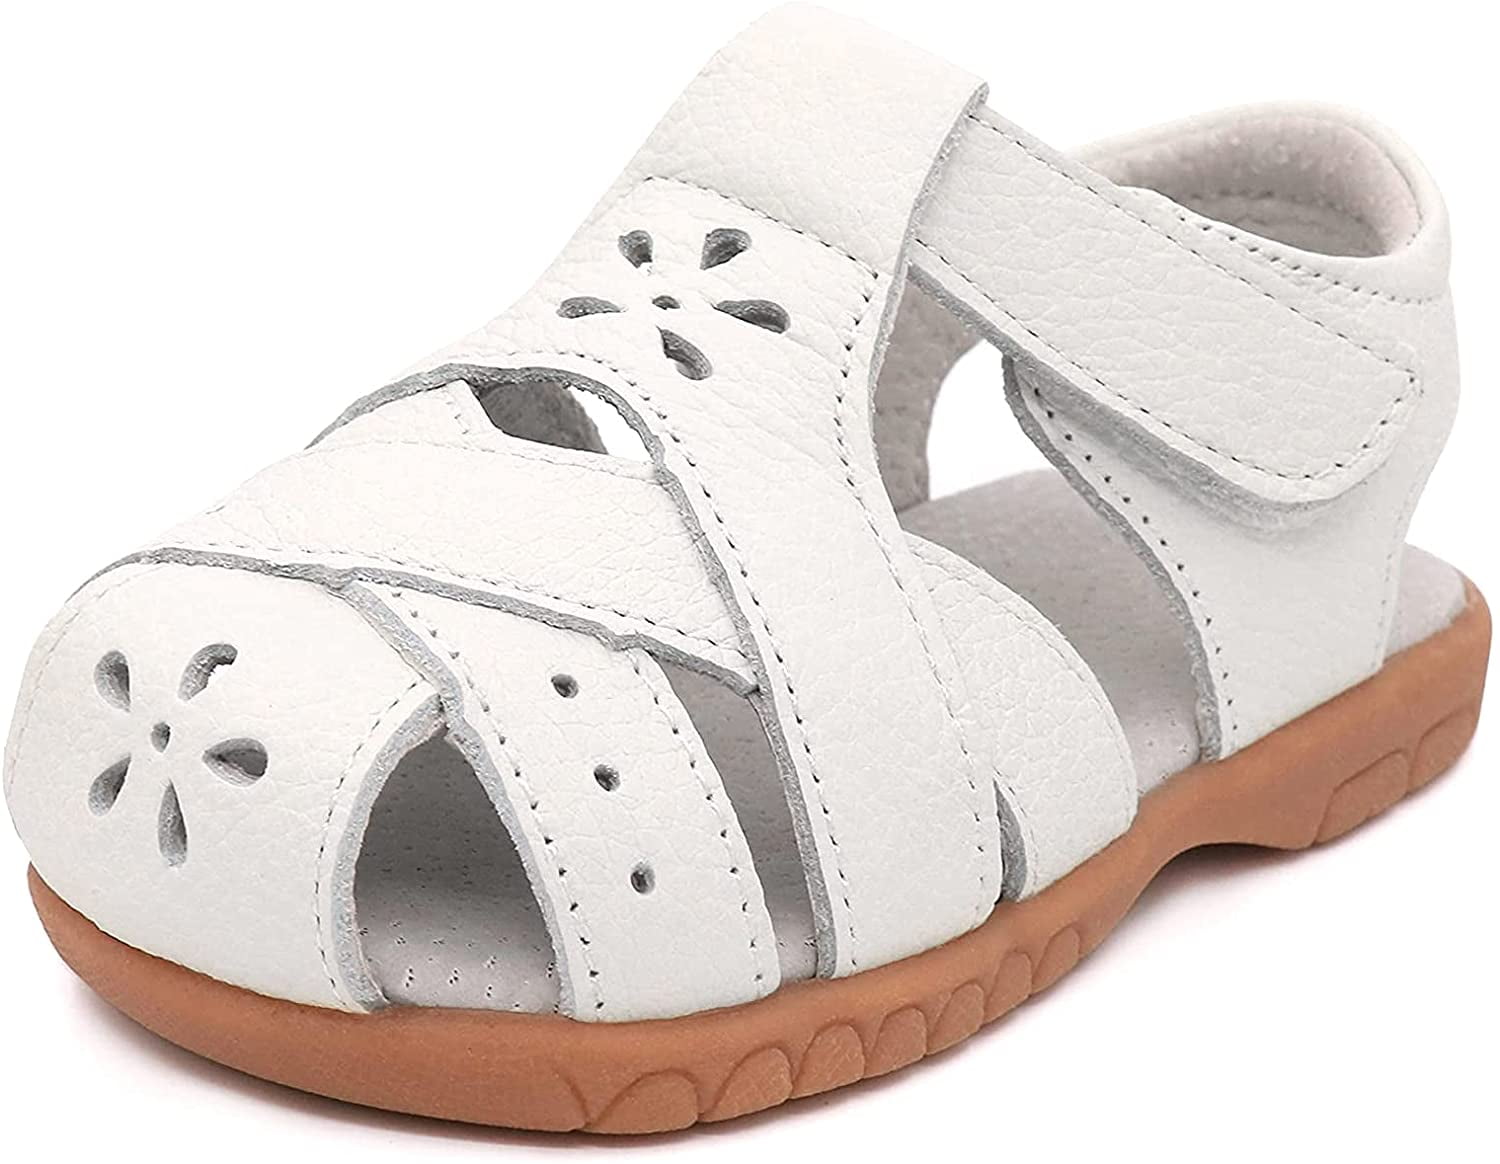 Flop Casual Womens Sandals Flat Summer Flip Leisure Roman Shoes